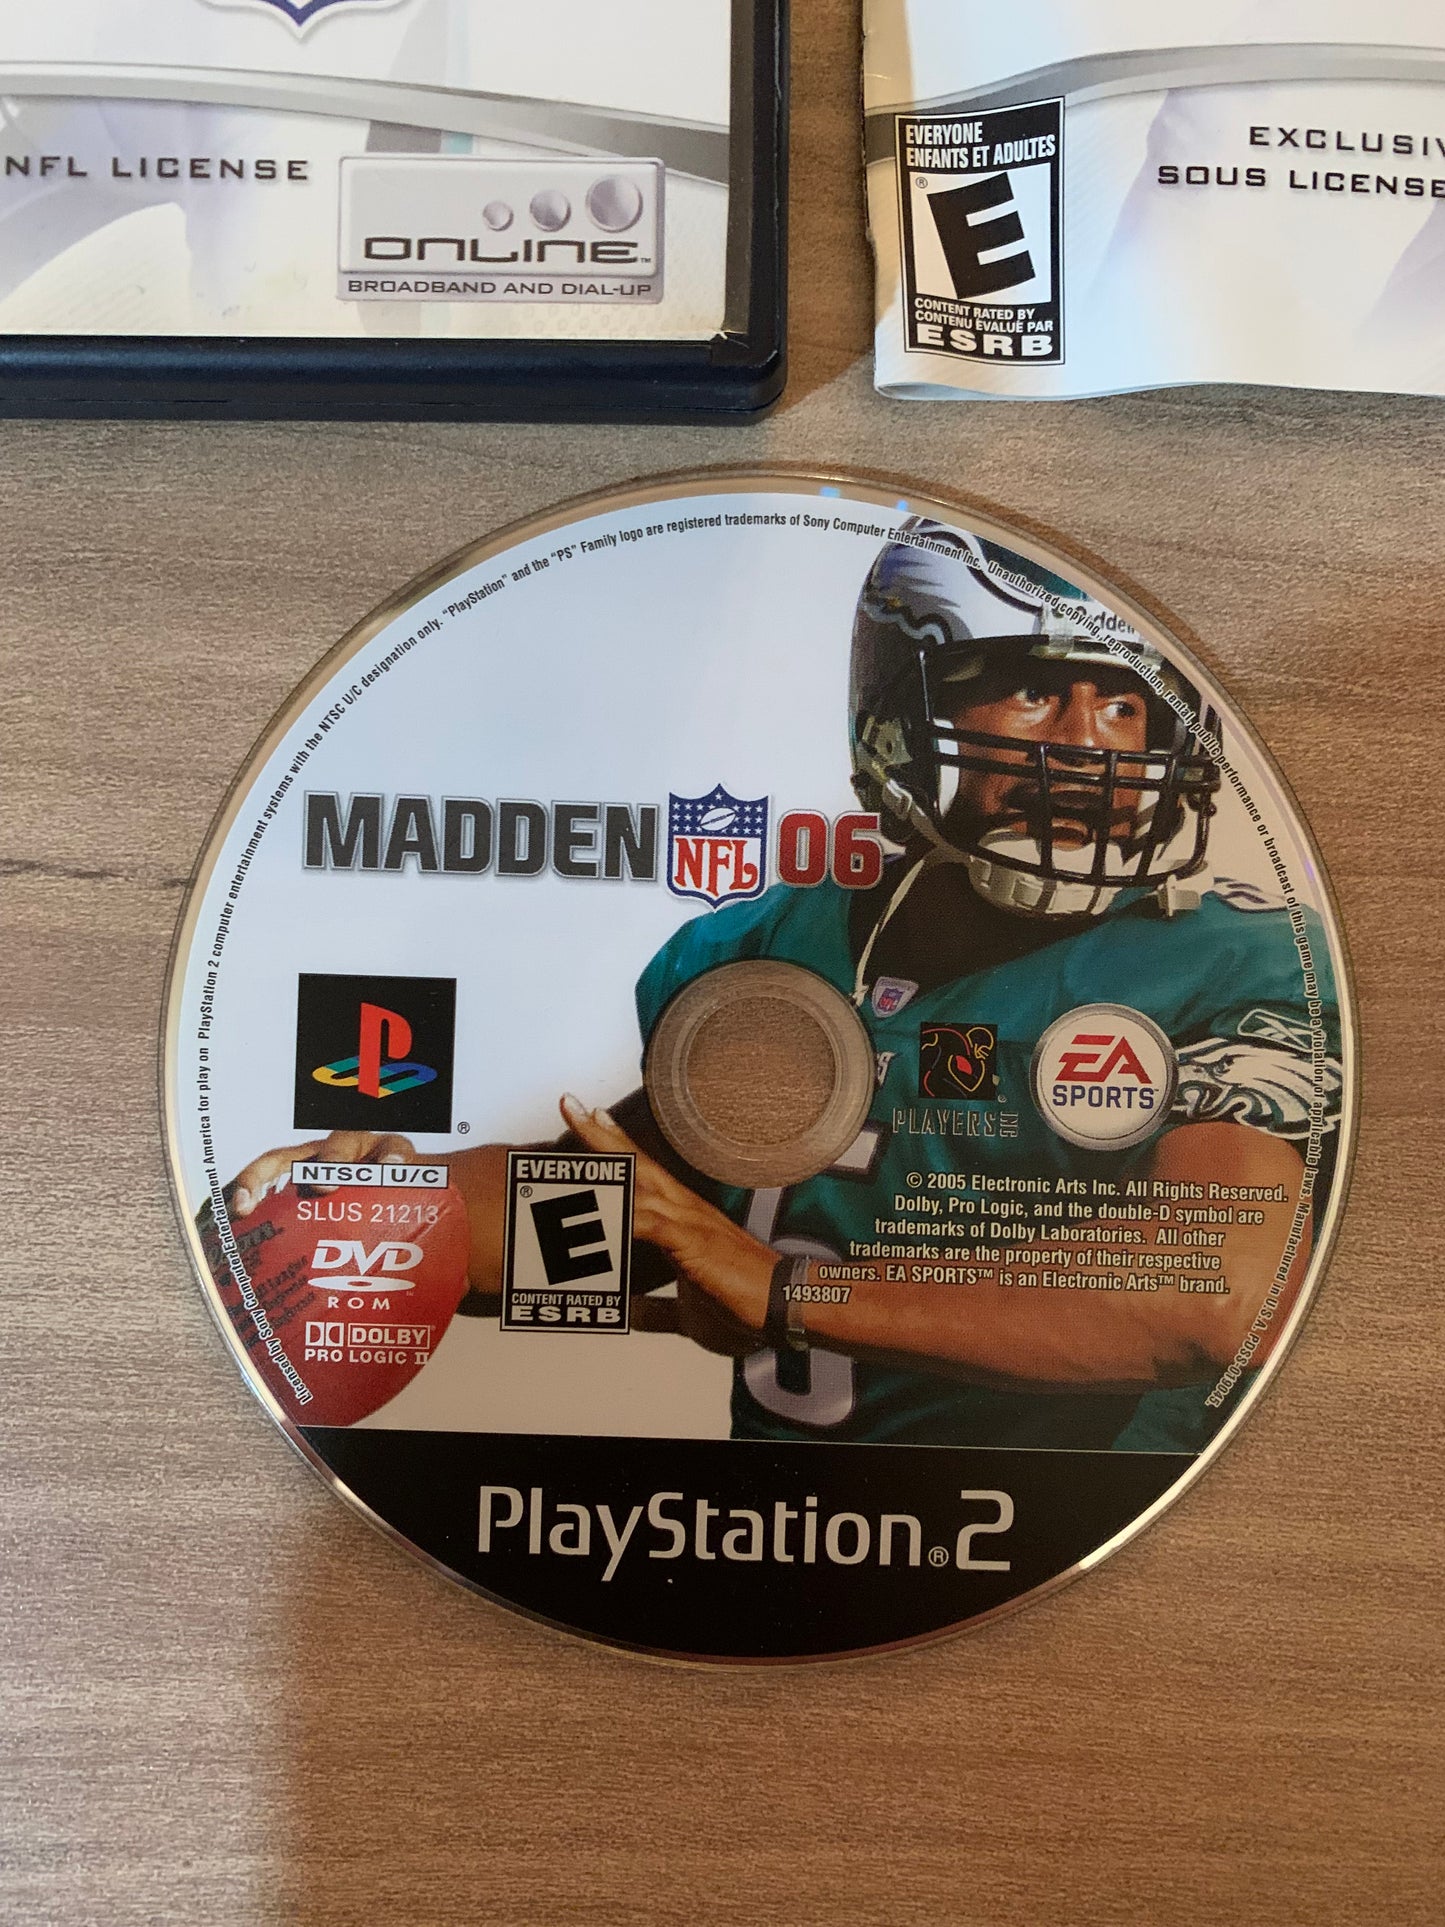 SONY PLAYSTATiON 2 [PS2] | MADDEN NFL 06